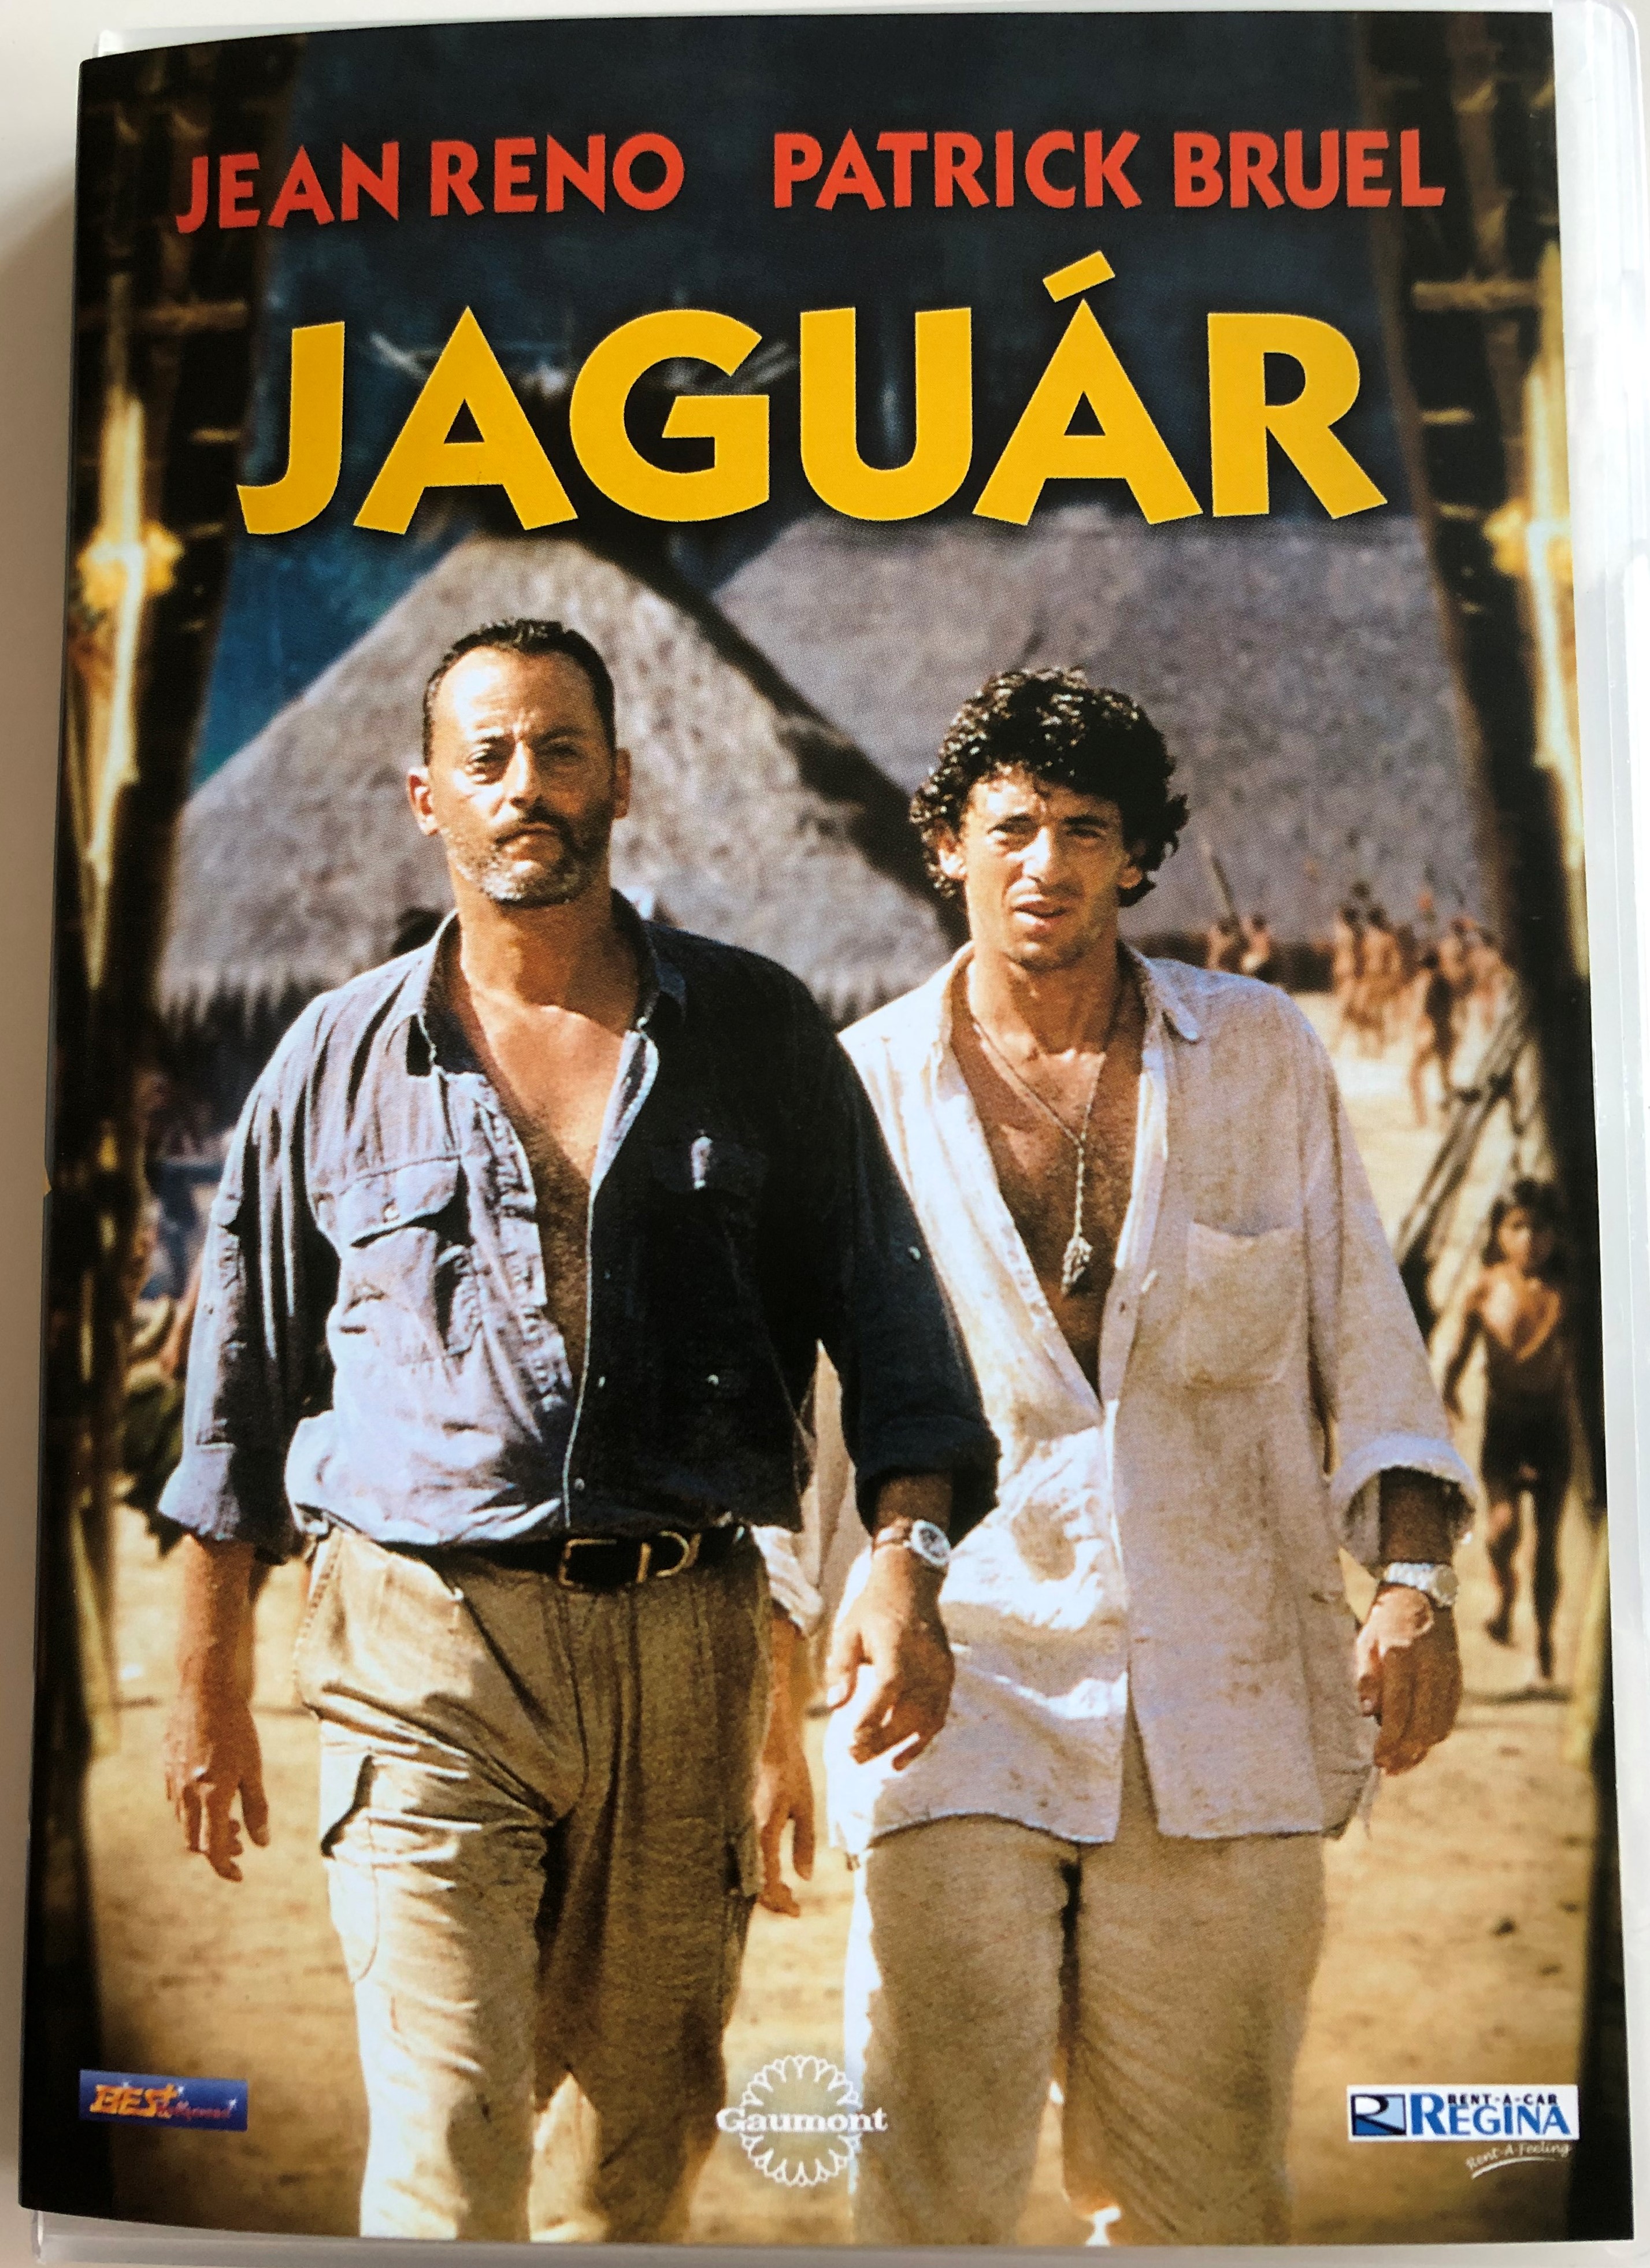 Le jaguar DVD 1996 Jaguár  1.JPG